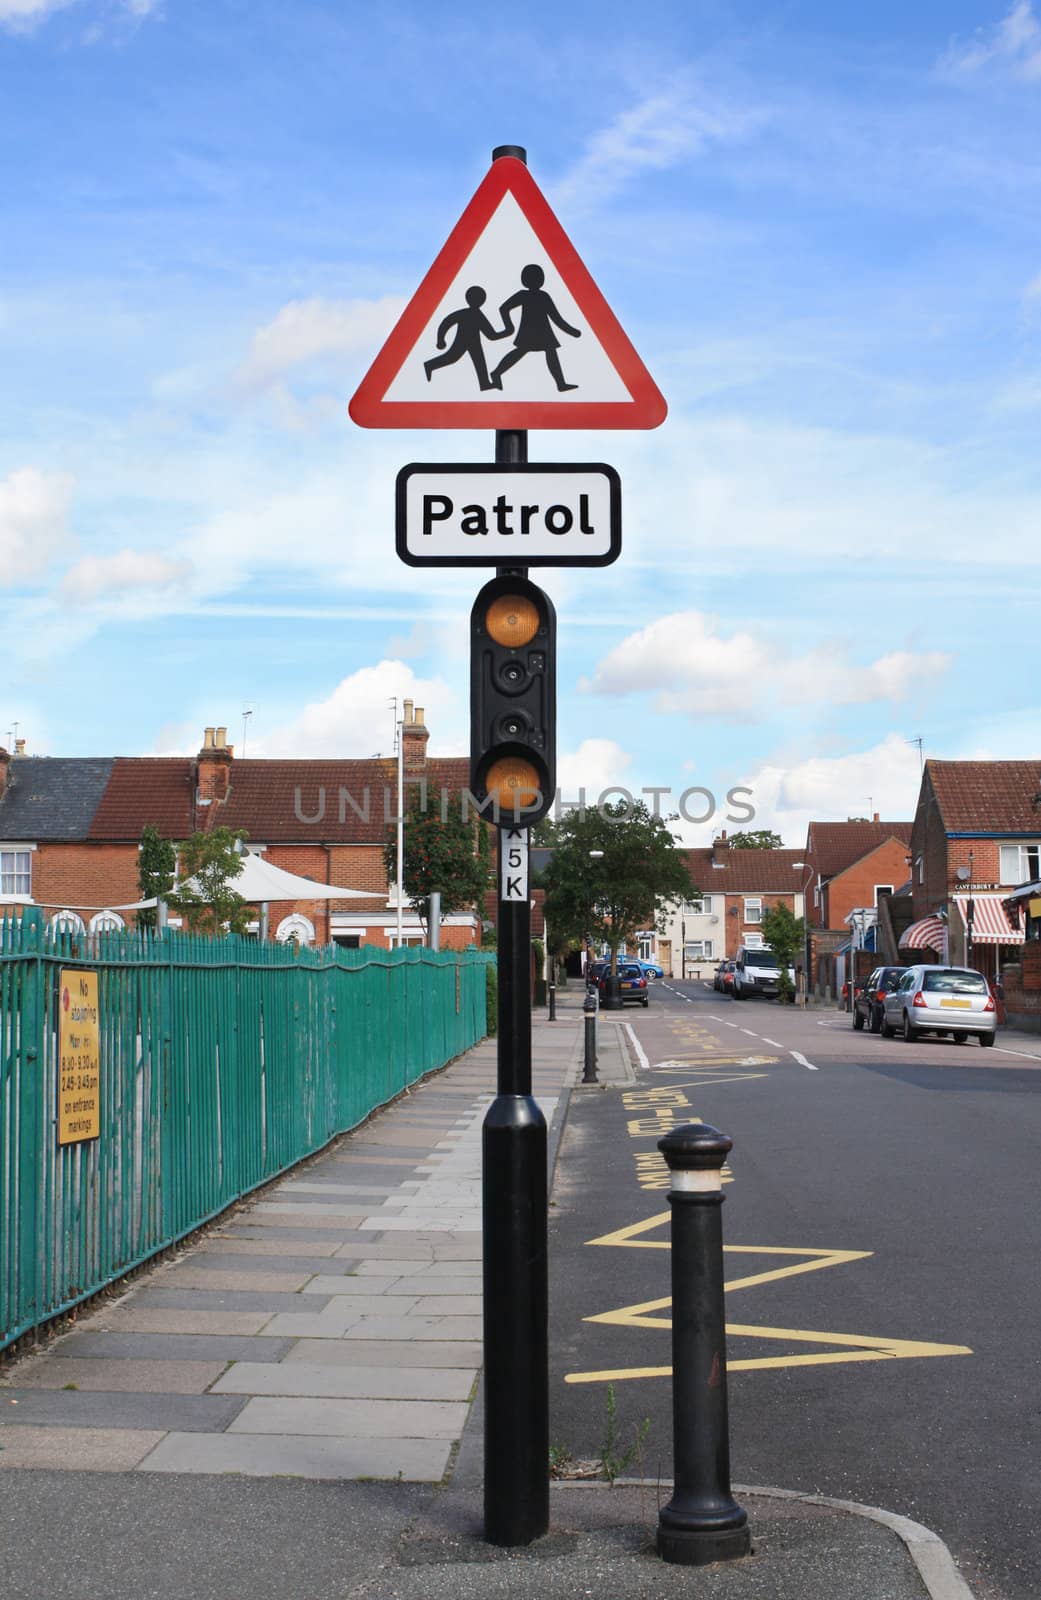 School and school patrol warning traffic sign in a street in England.